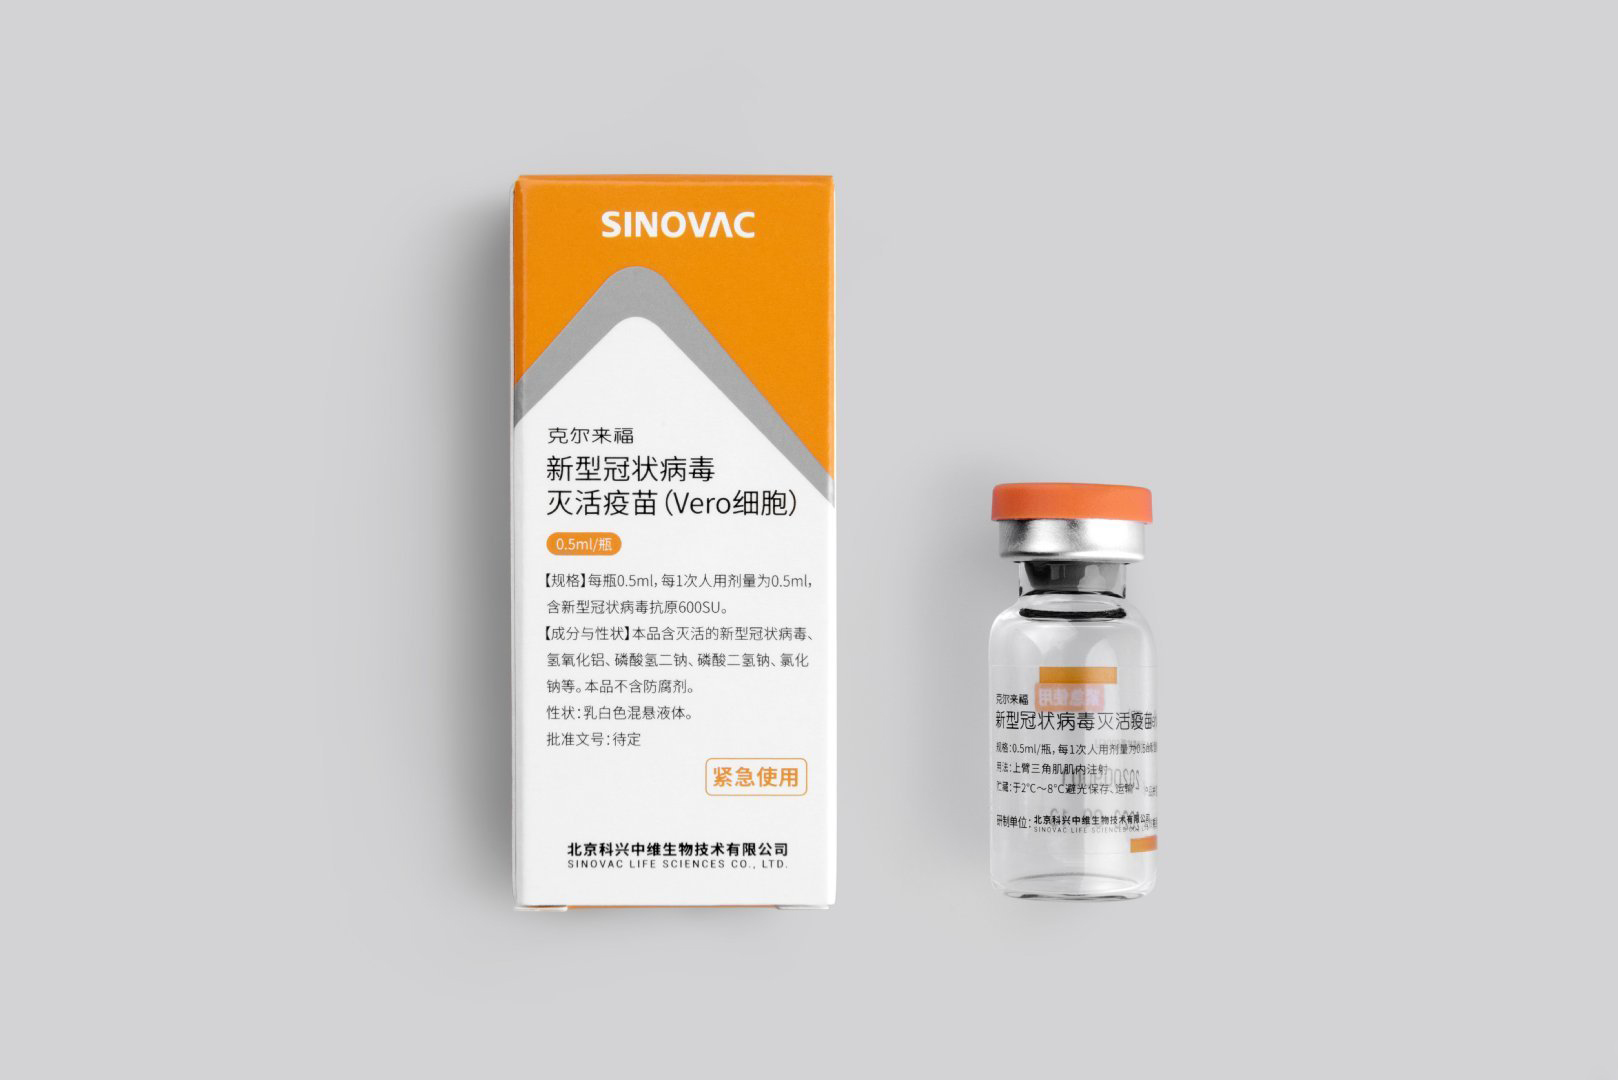 Sars cov вакцина. Vero Cell вакцина. Covid-19 vaccine (Vero Cell). Covid-19 вакцина китайская. Coronavac — Sinovac (Китай).